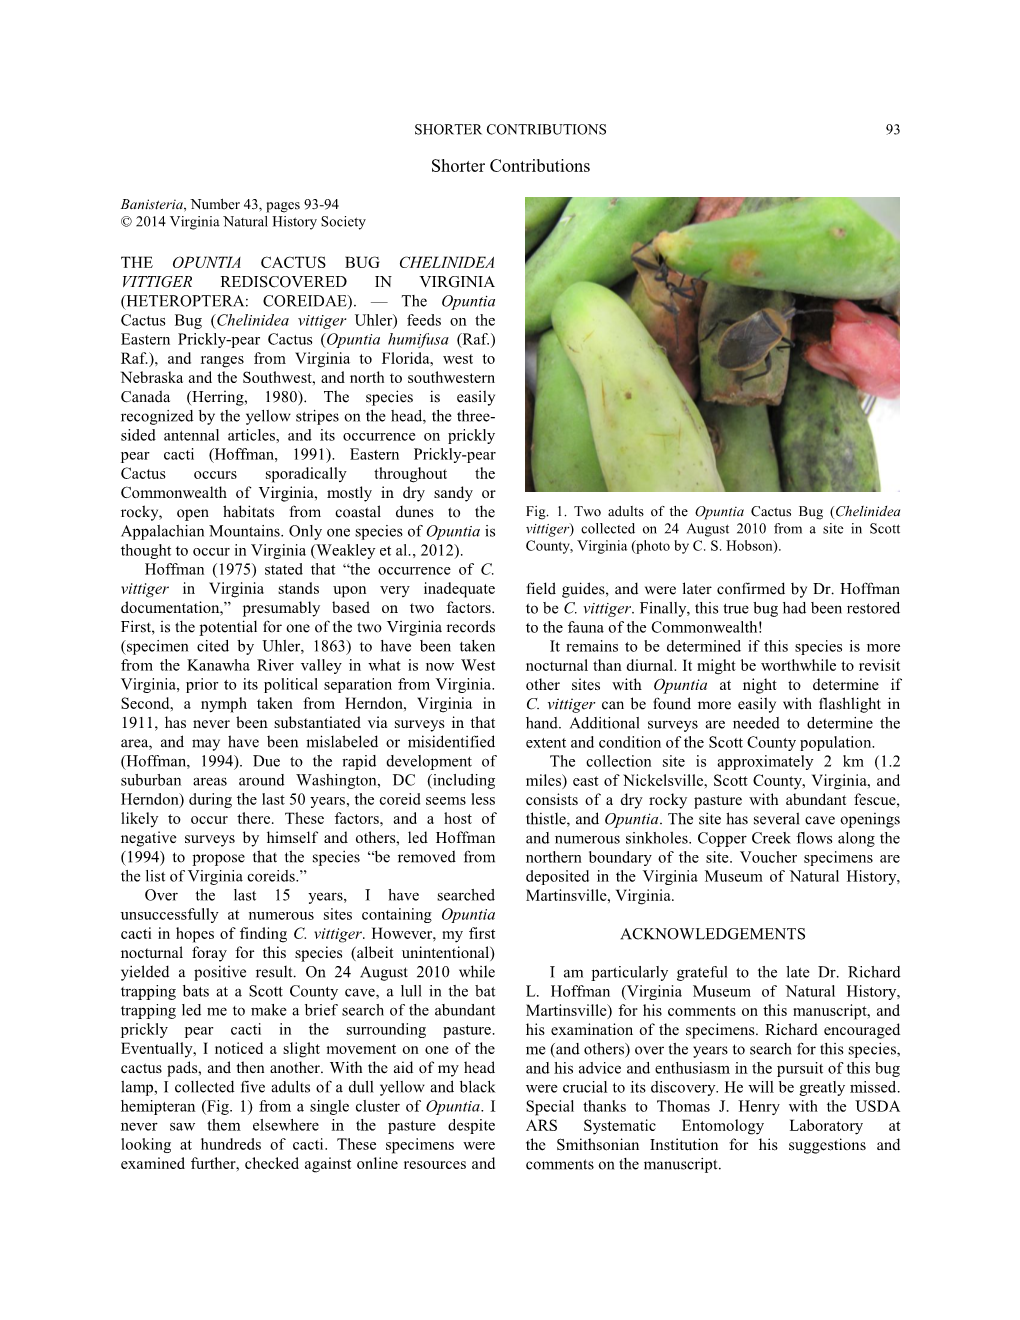 The Opuntia Squash Bug Chelinidea